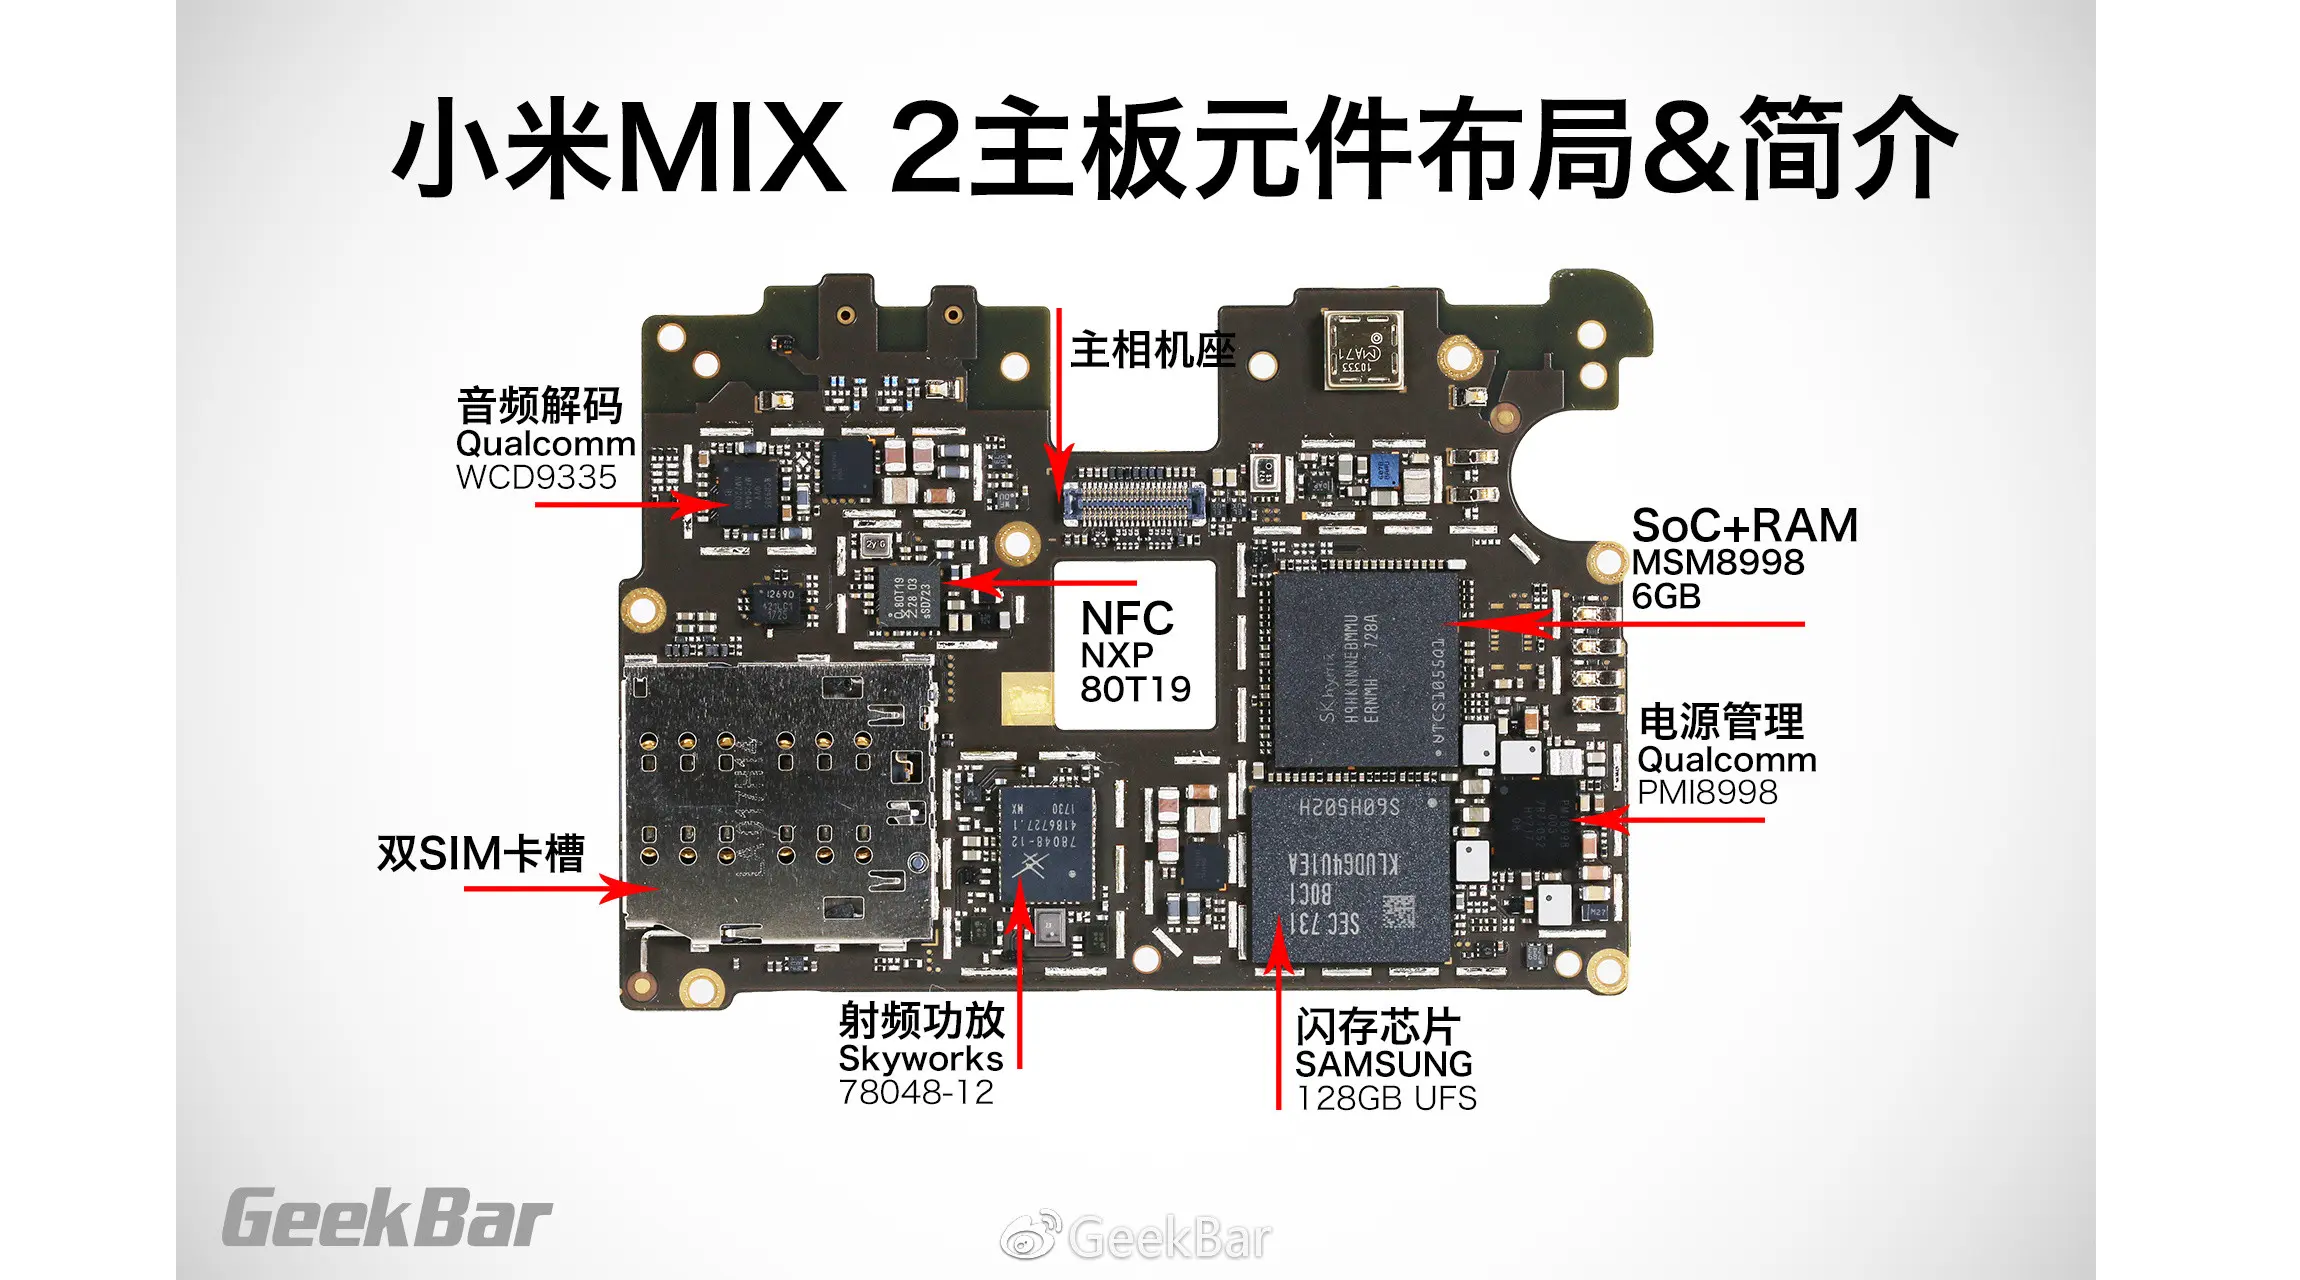 Komponen dalam Mi MIX 2 (Sumber: GeekBar)